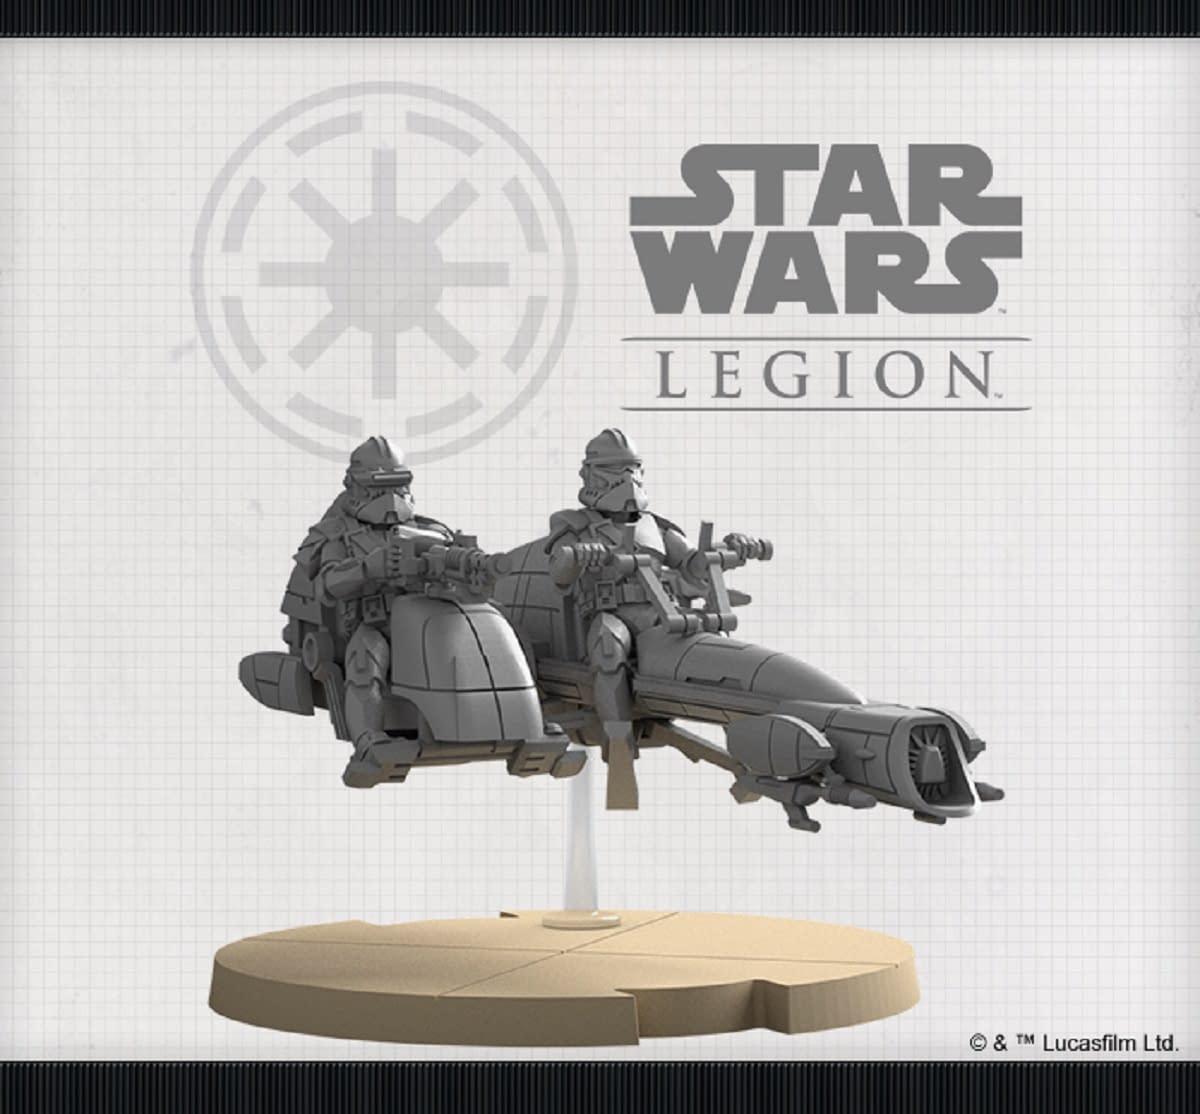 "Star Wars: Legion" Rolls Out New Droidekas Troops